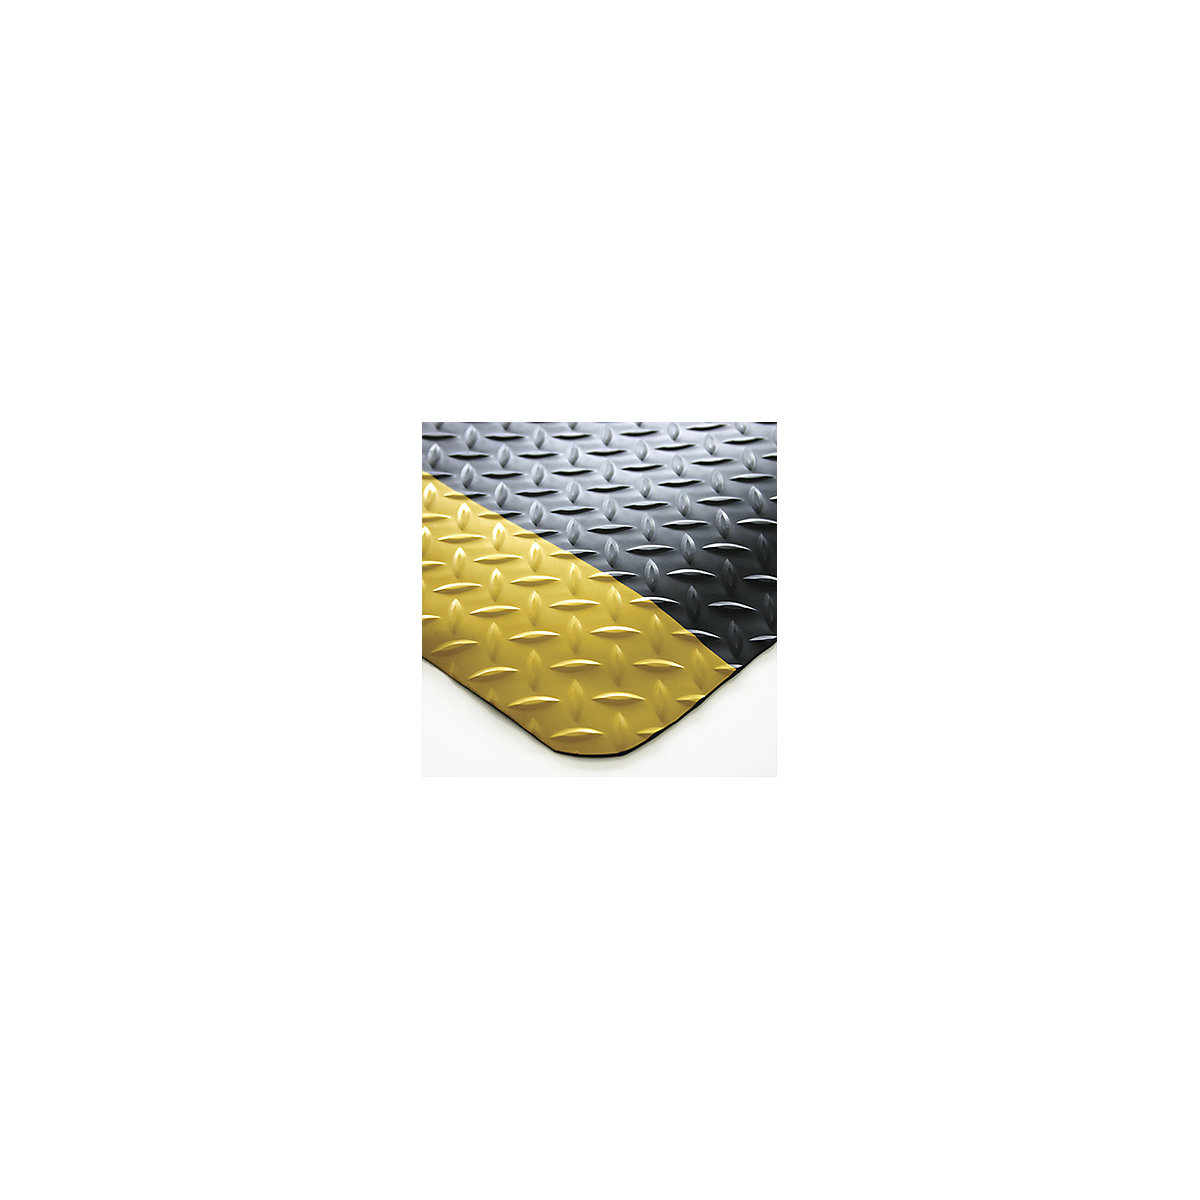 DECKPLATE anti-fatigue matting, fixed dimensions, black / yellow, 900 x 600 mm